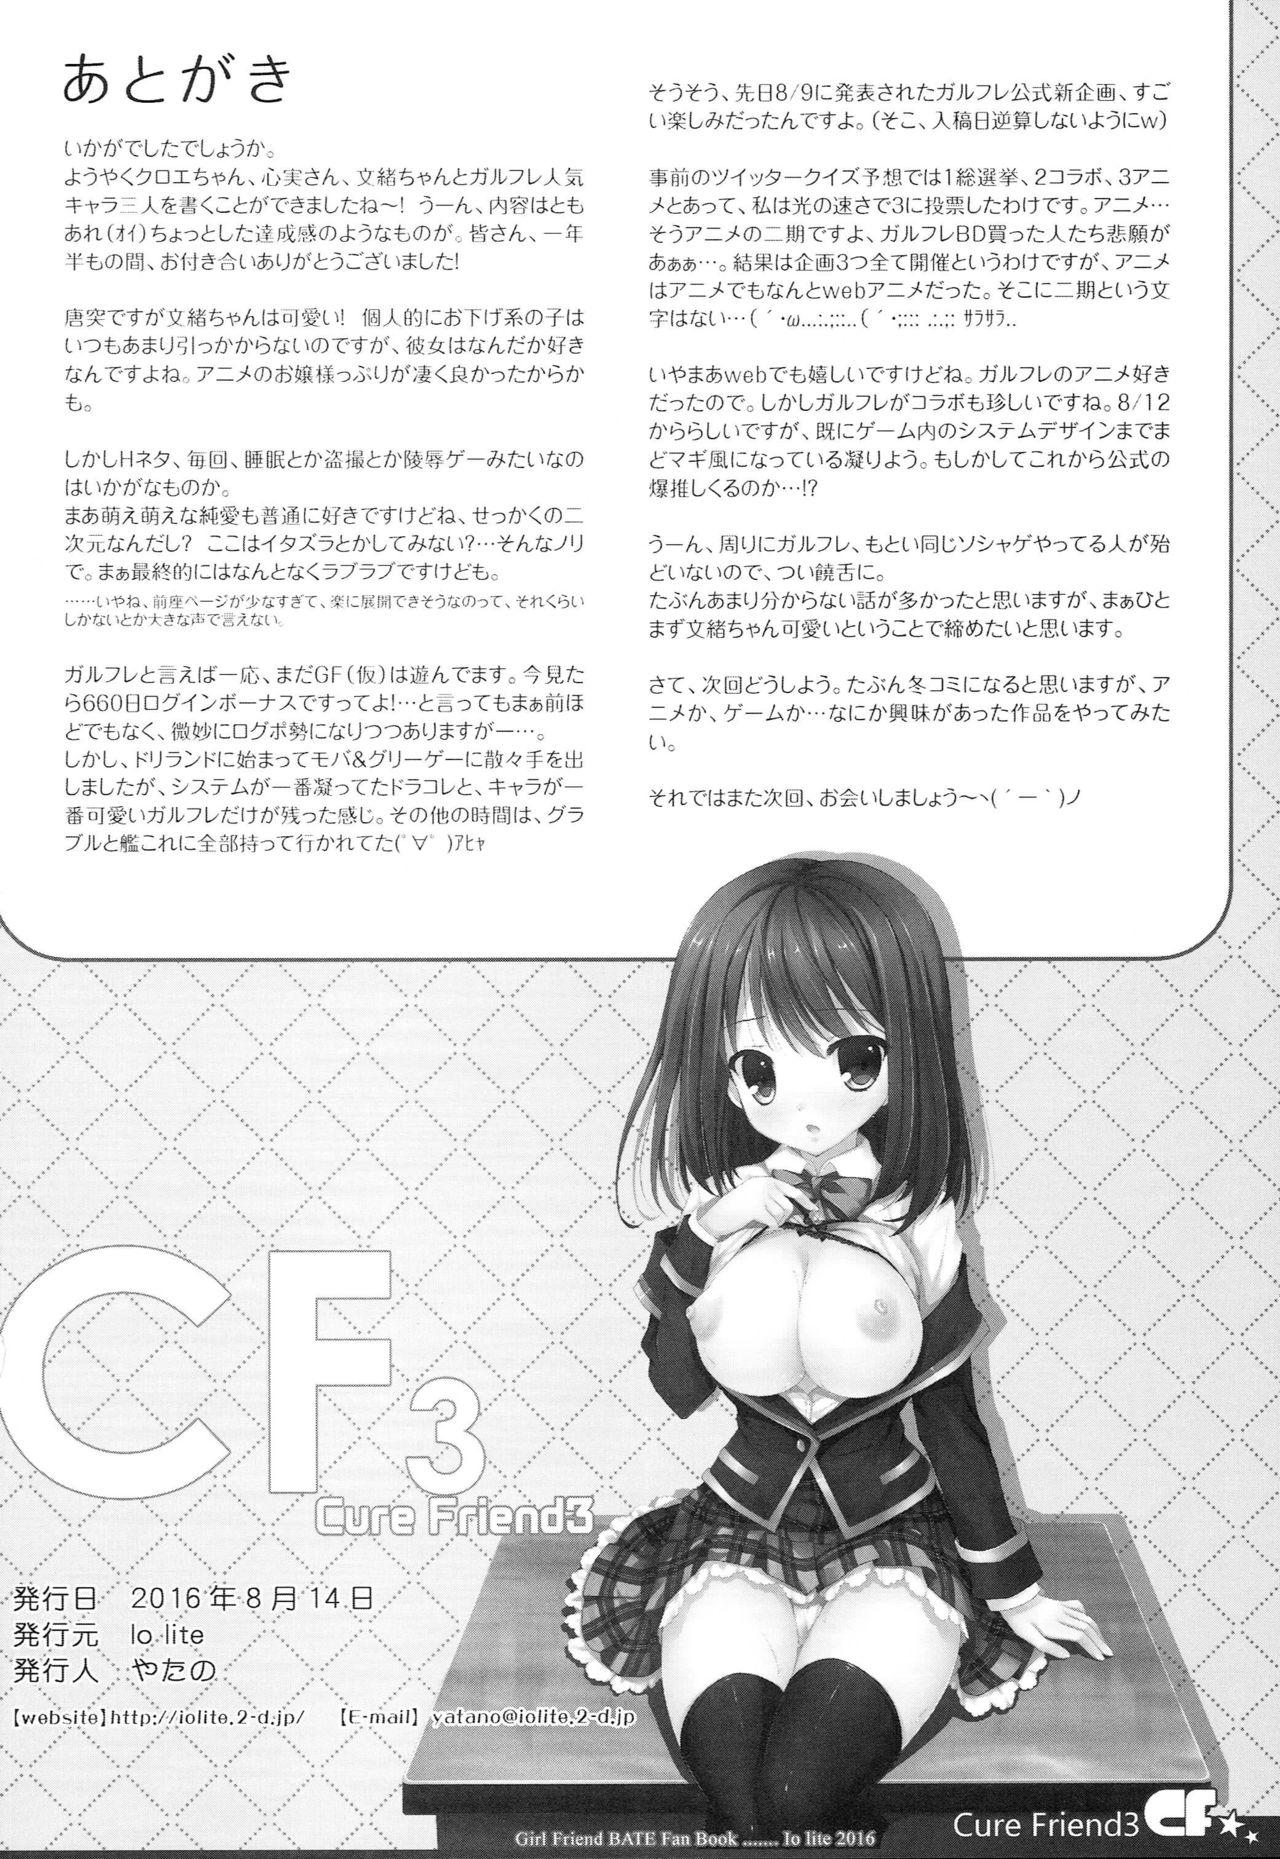 Roludo CureFriend3 - Girl friend beta Fitness - Page 13